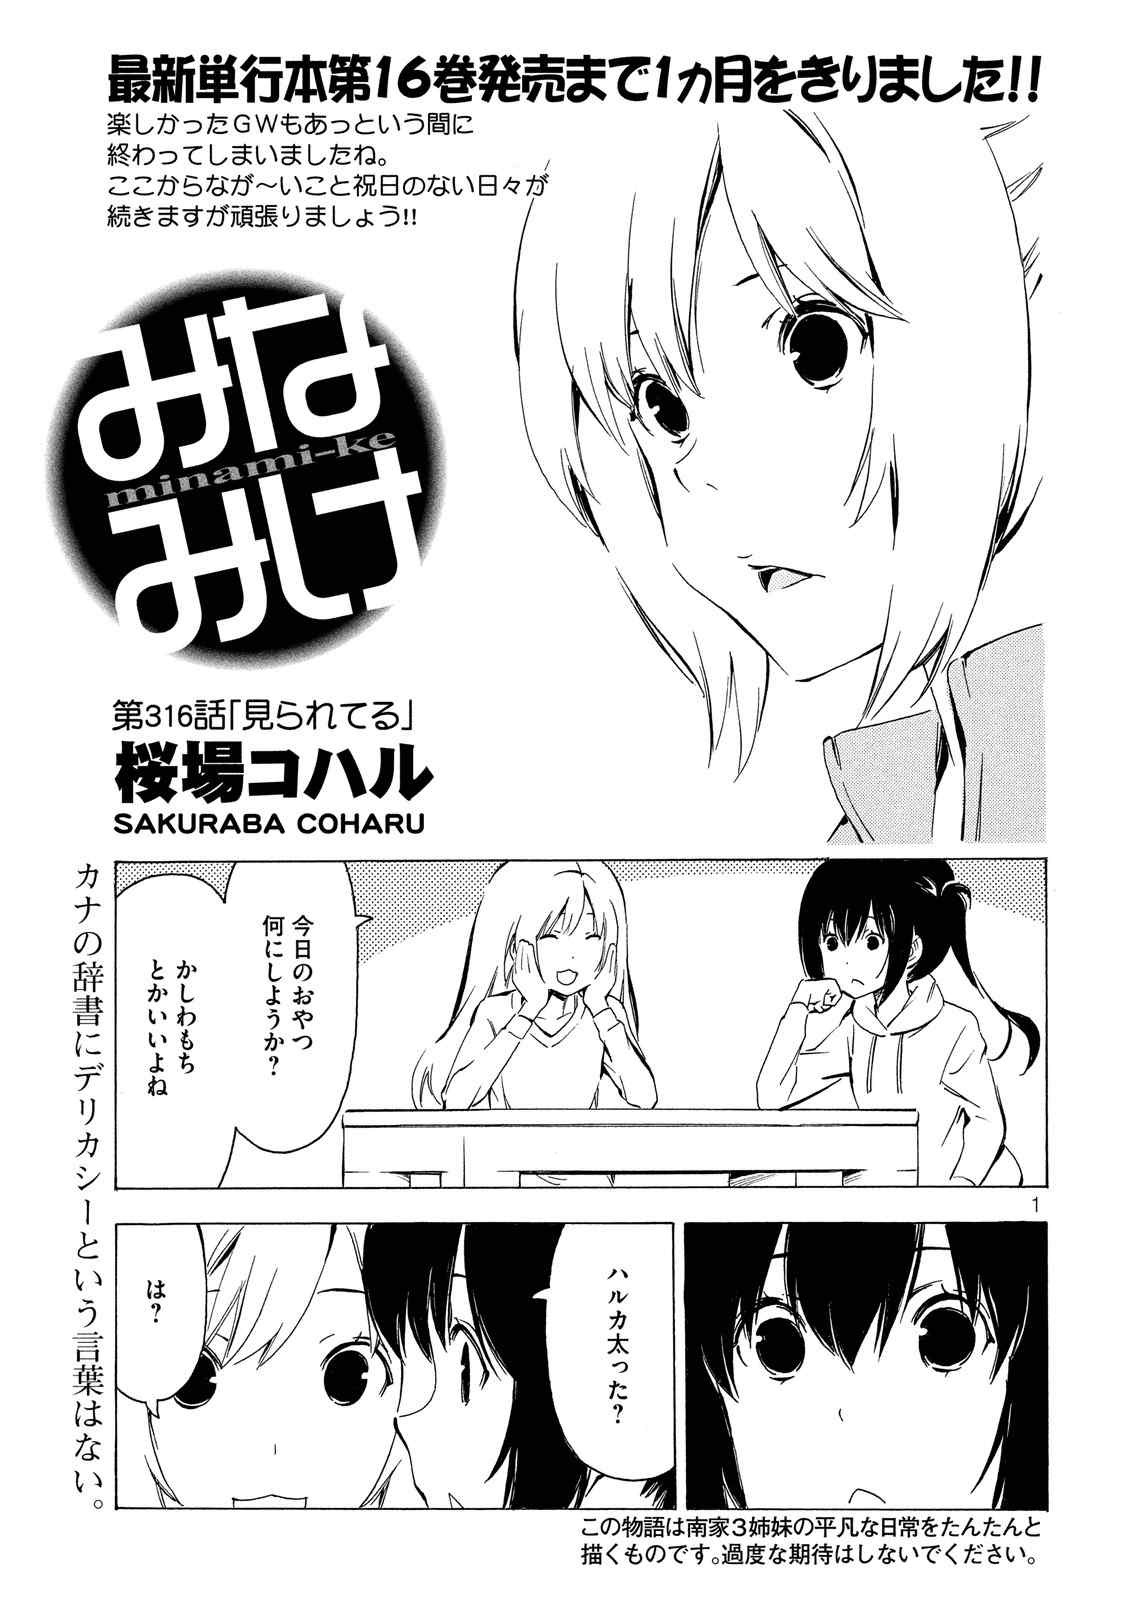 Minami-ke - Chapter 316 - Page 1